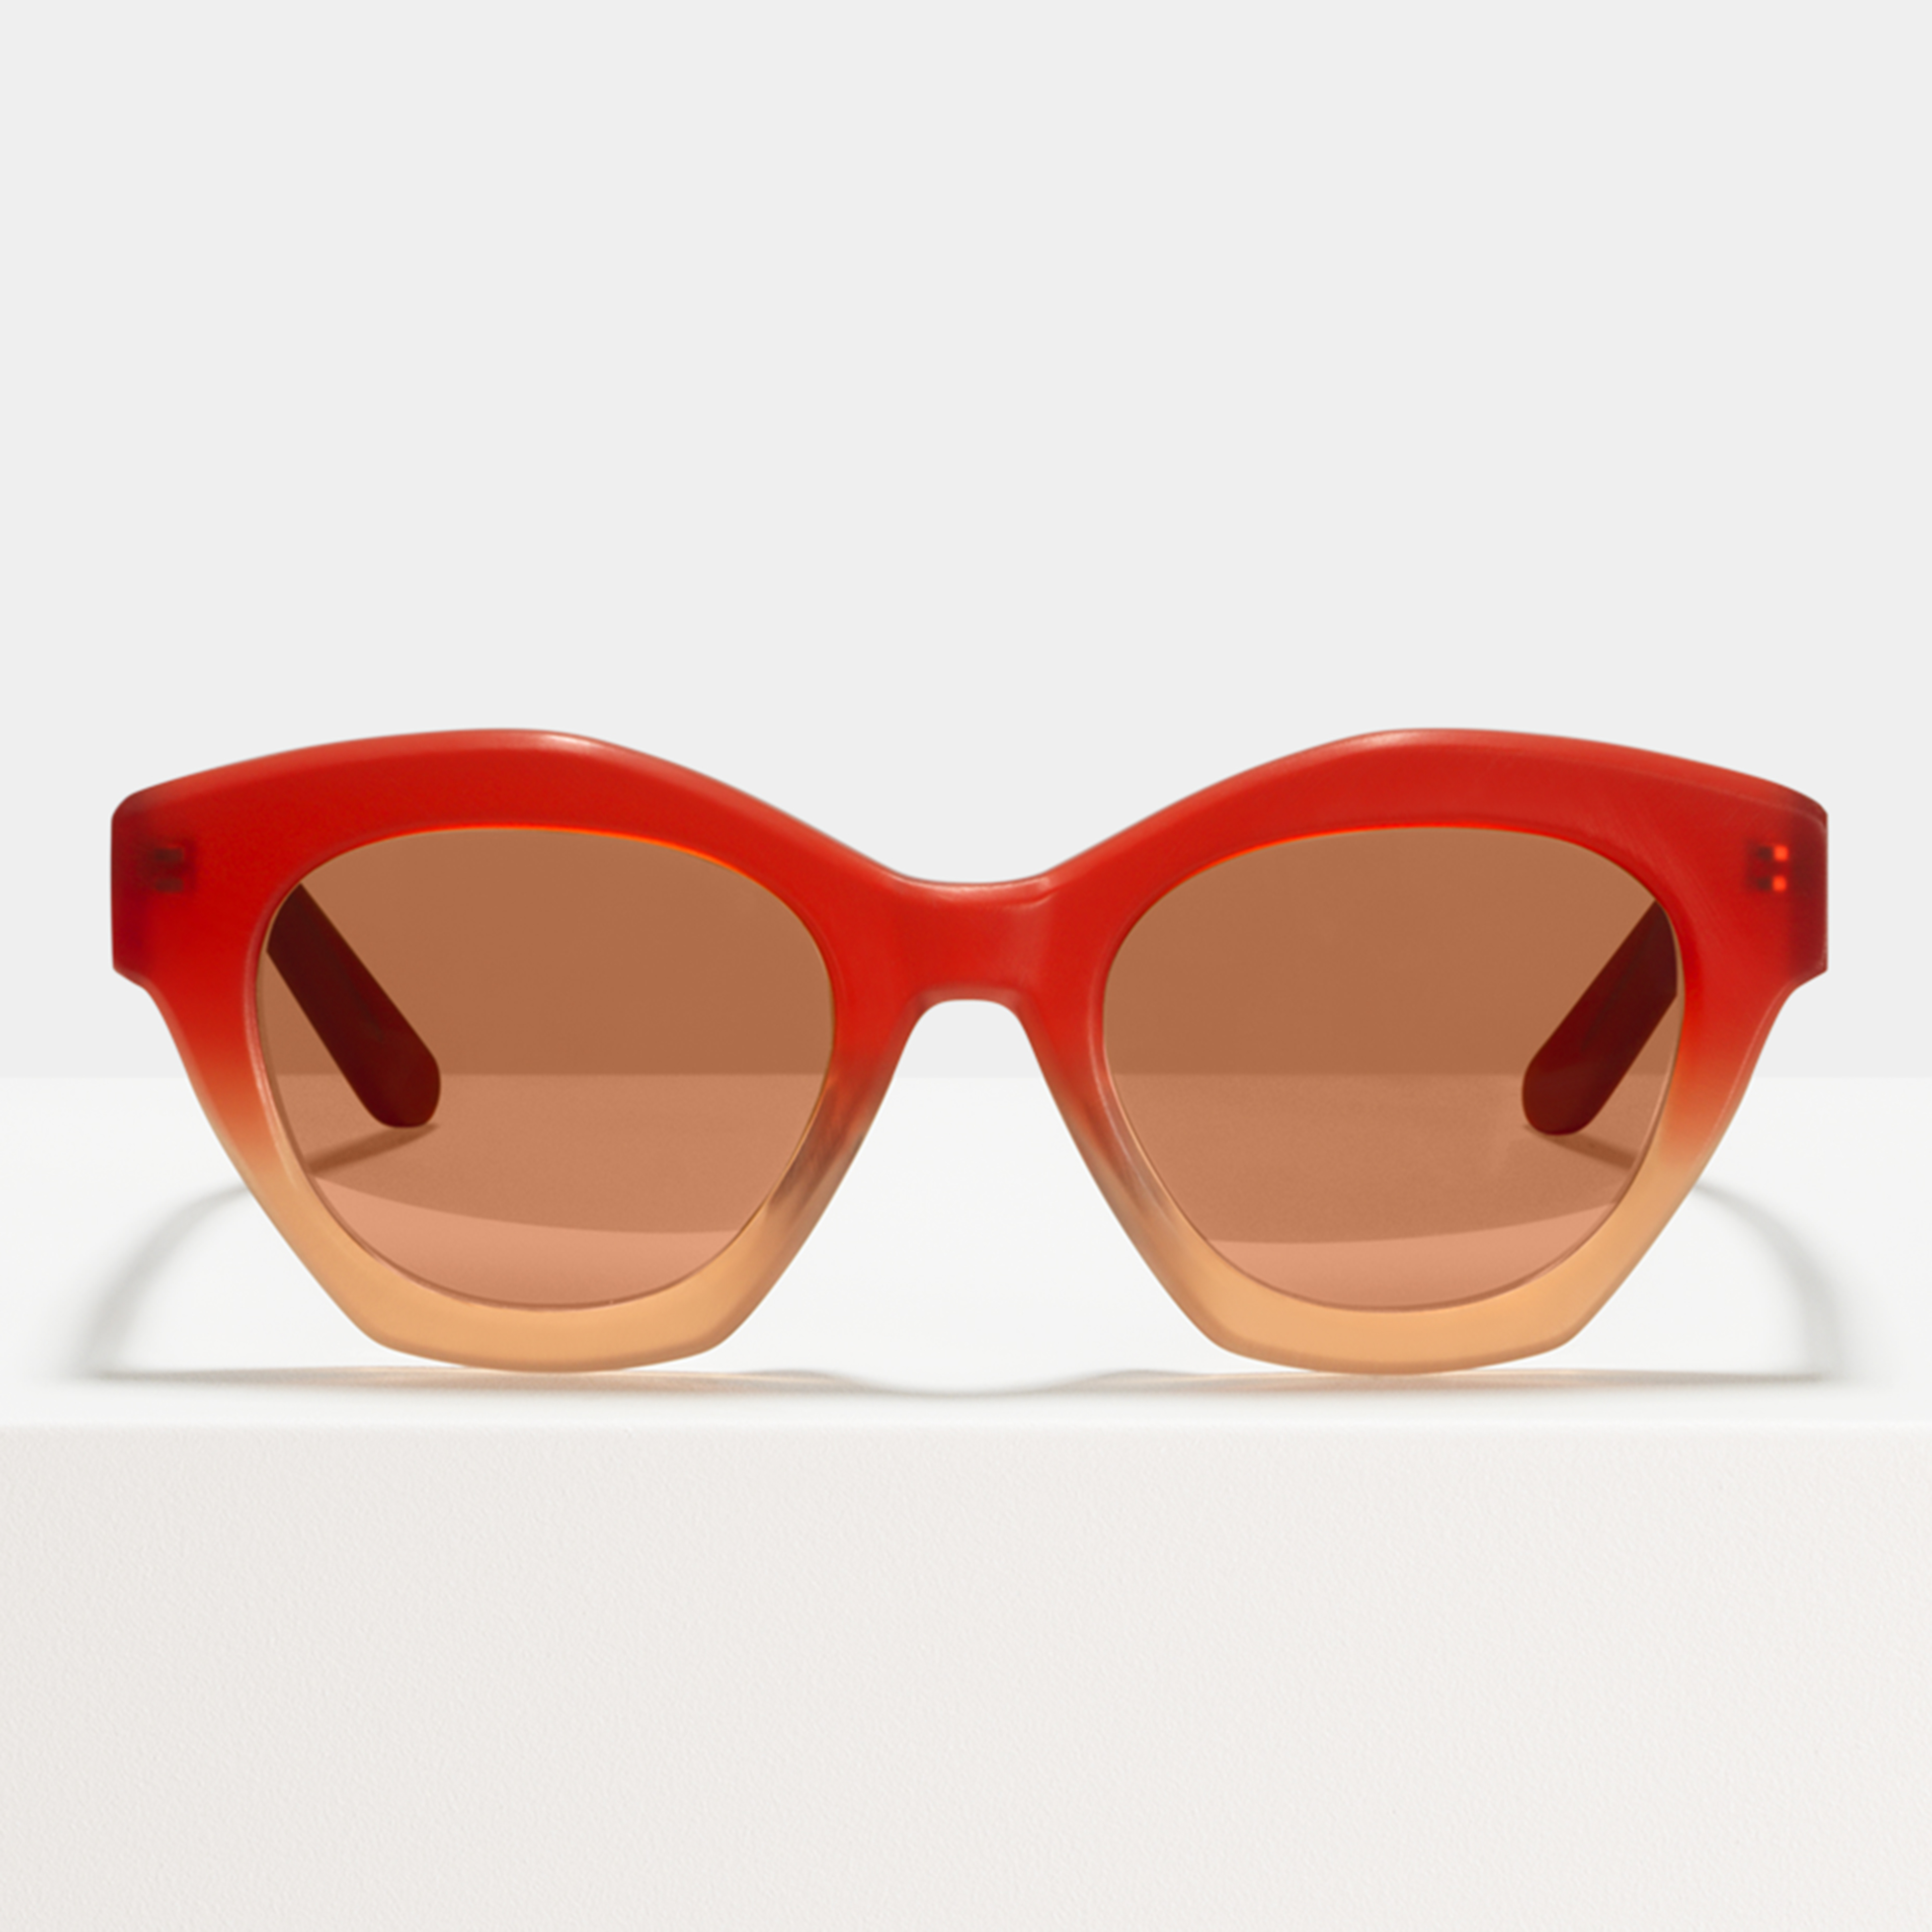 Ace & Tate Sonnenbrillen |  Acetat in Orange, Rot